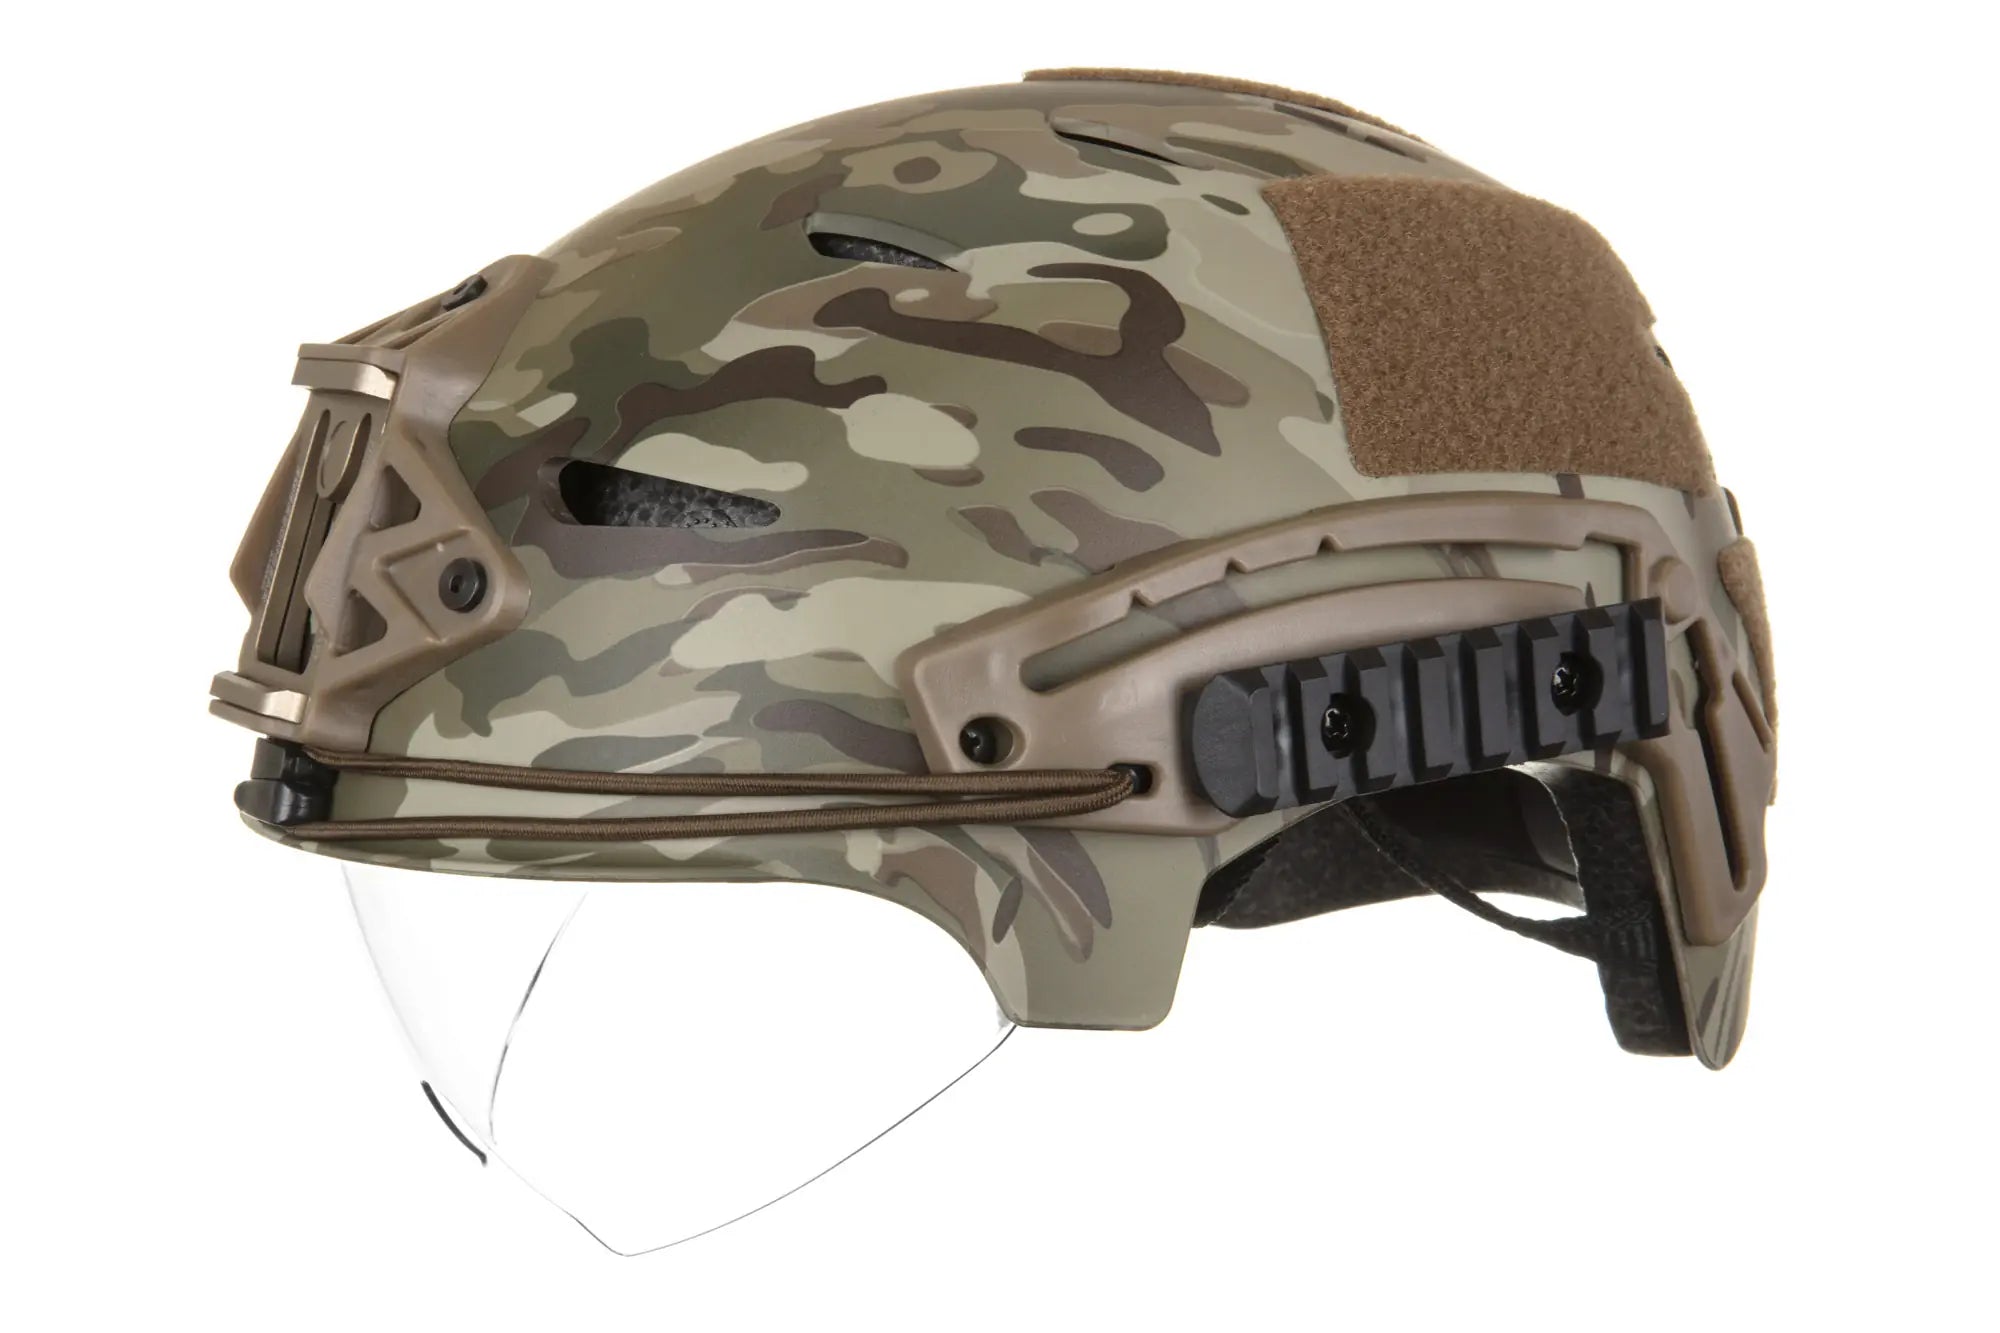 Replica of Emerson Gear EXF Bump Protective Multicam helmet-2